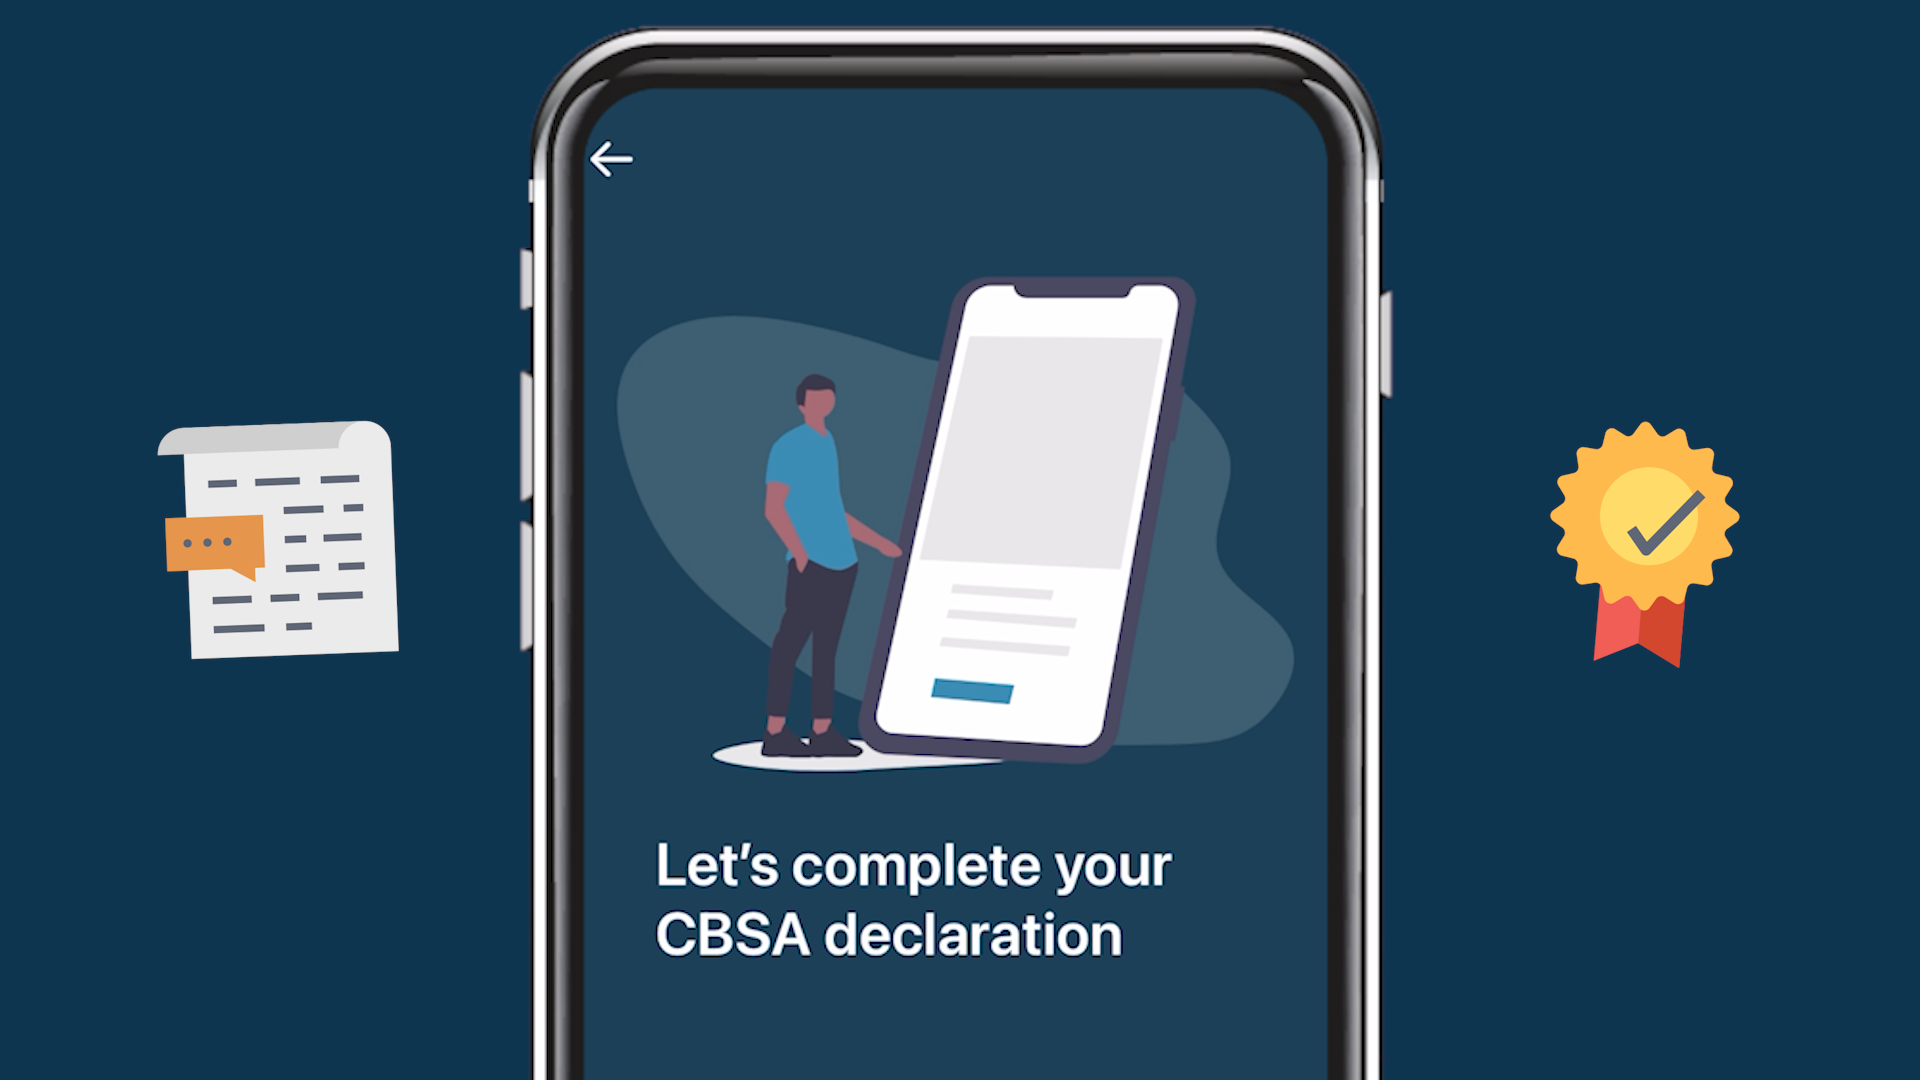 Let's complete your CBSA declaration